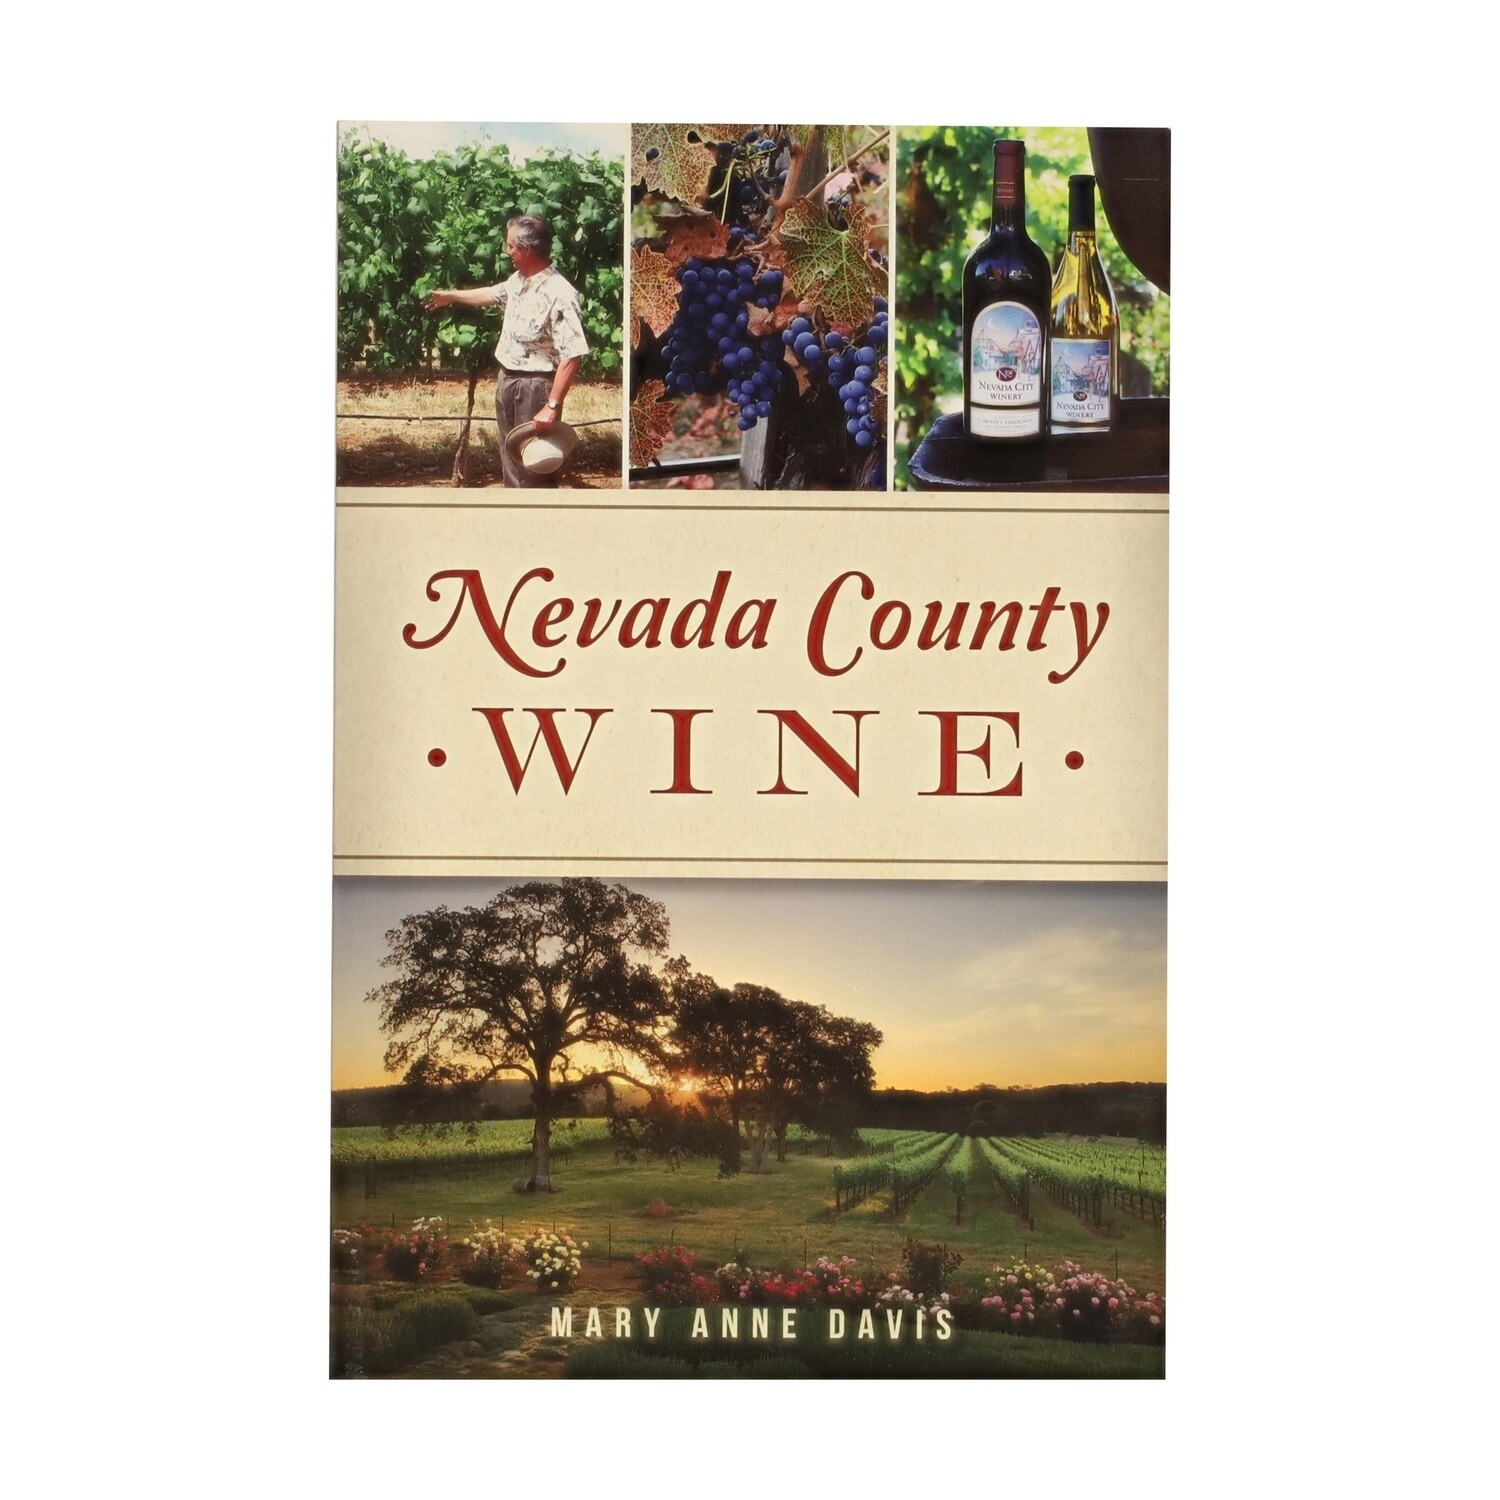 Nevada Country Wine by Mary Anne Davis